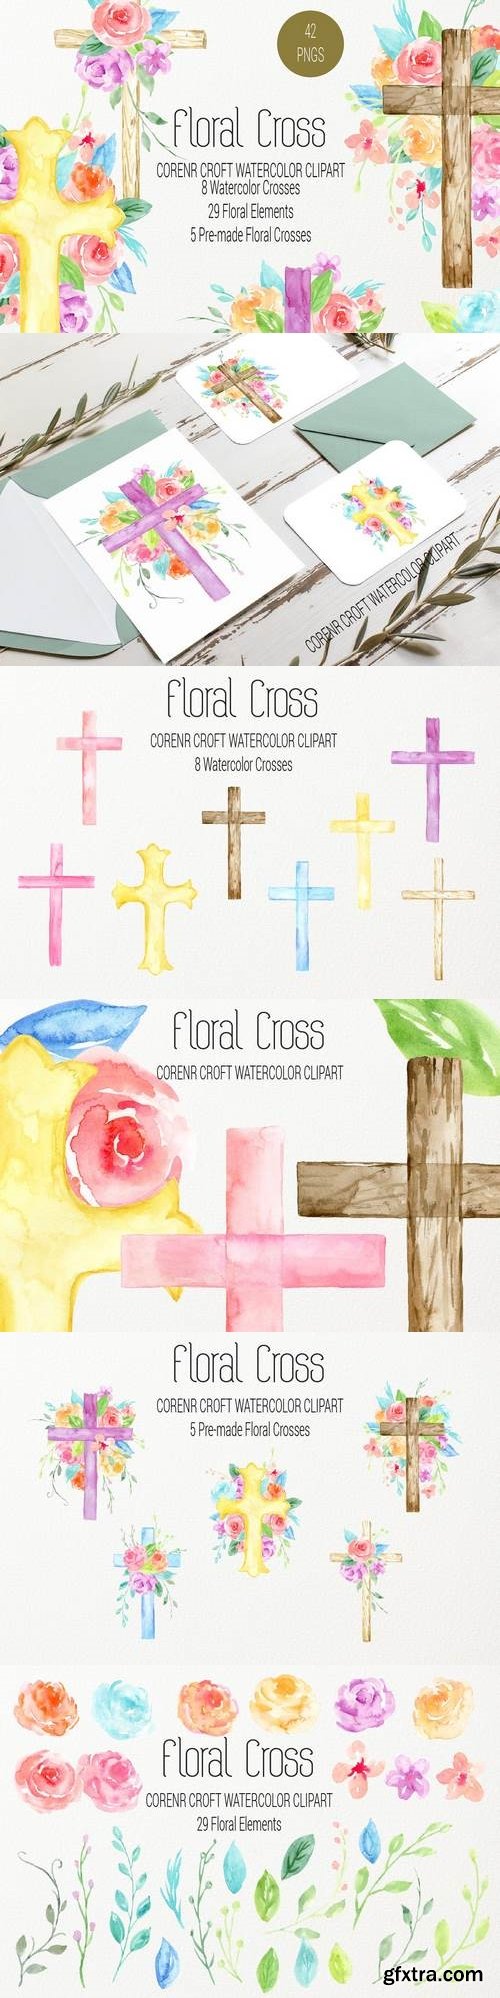 Watercolor clipart floral cross